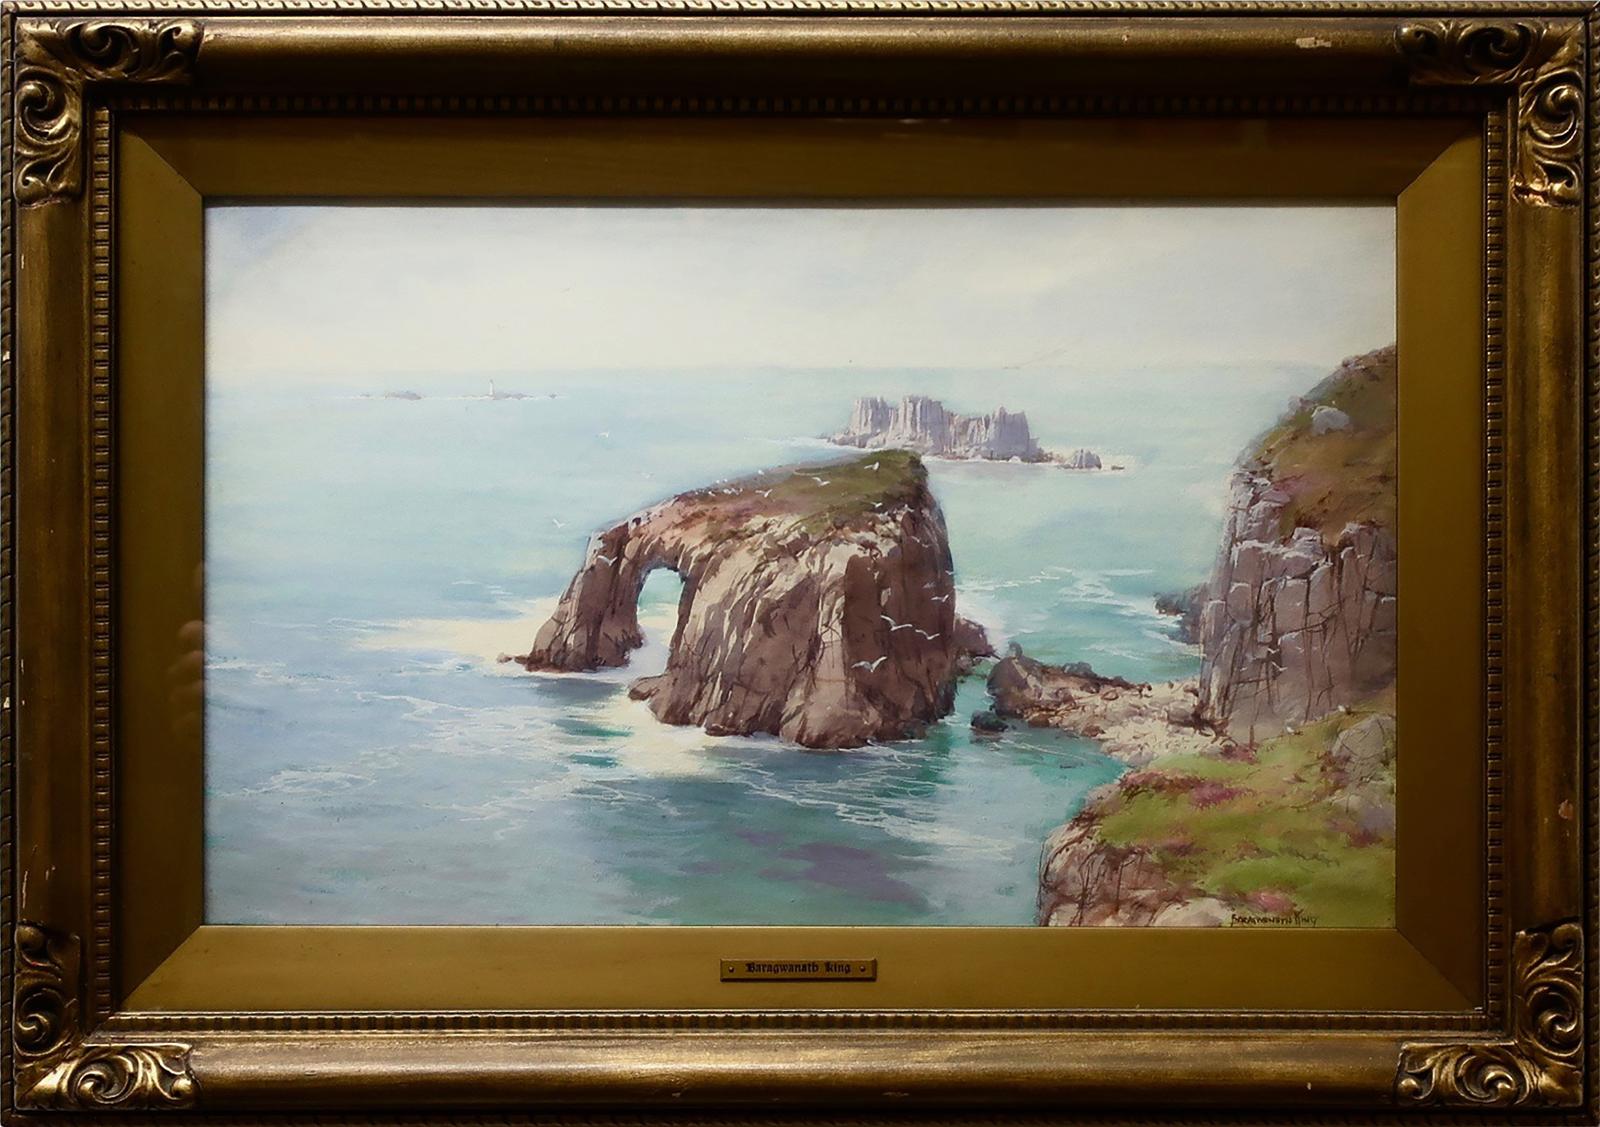 John Baragwanath King (1864-1939) - Coastal View